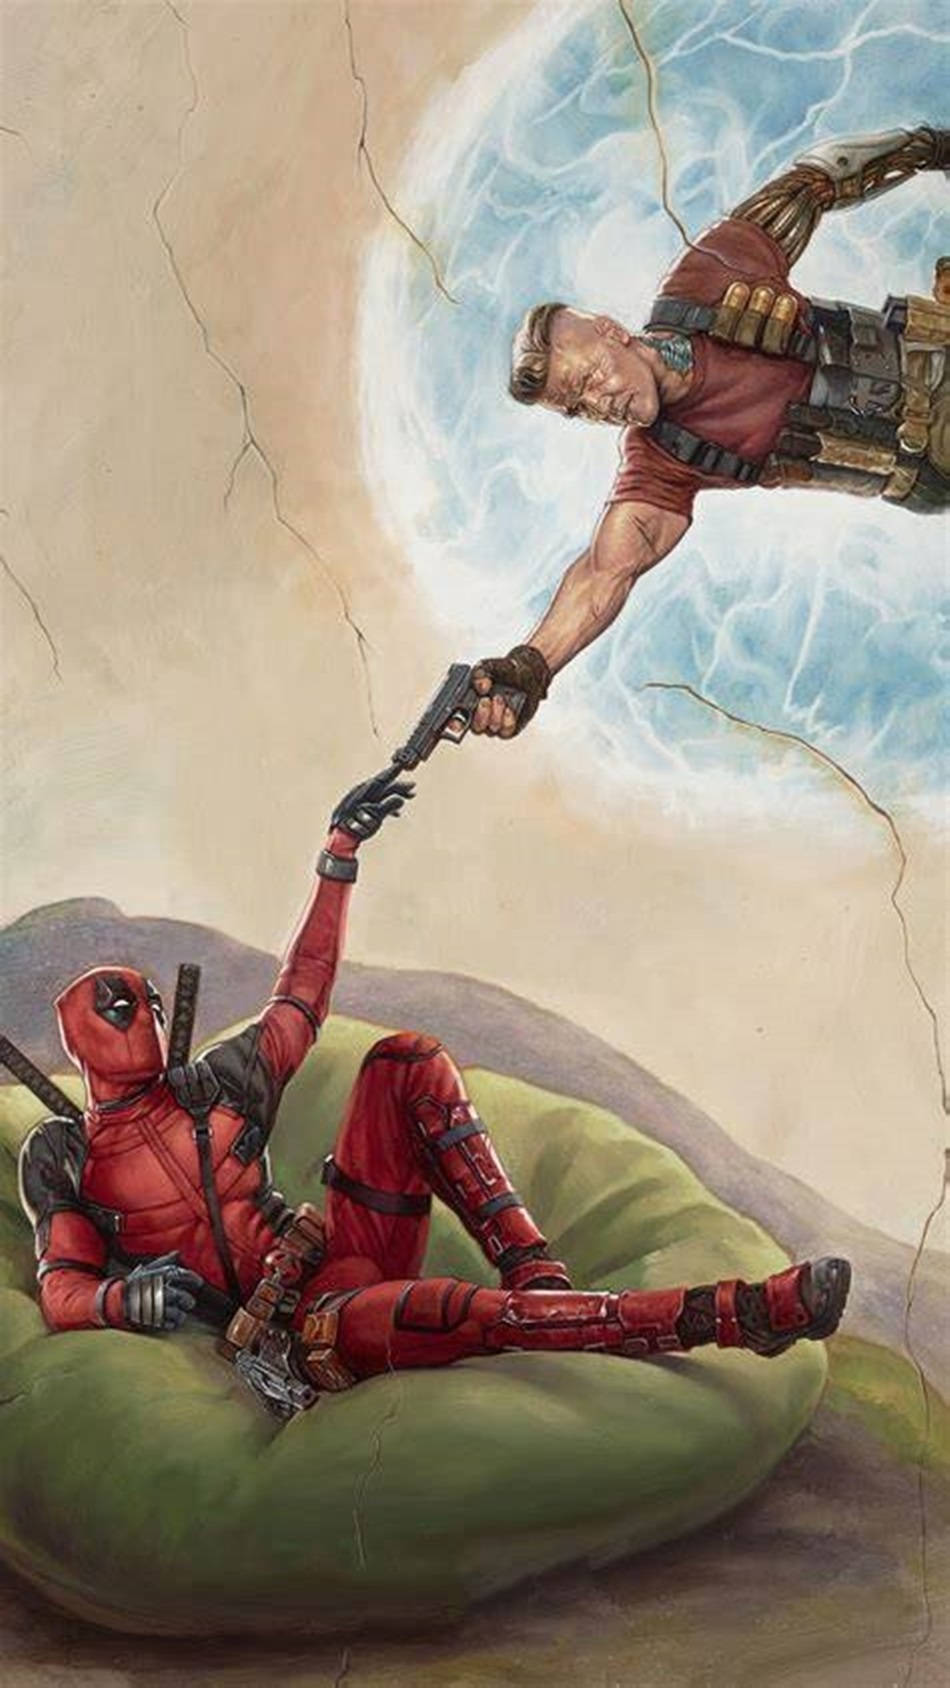 Deadpool Movie Creation Of Adam Painting Parody Wallpaper